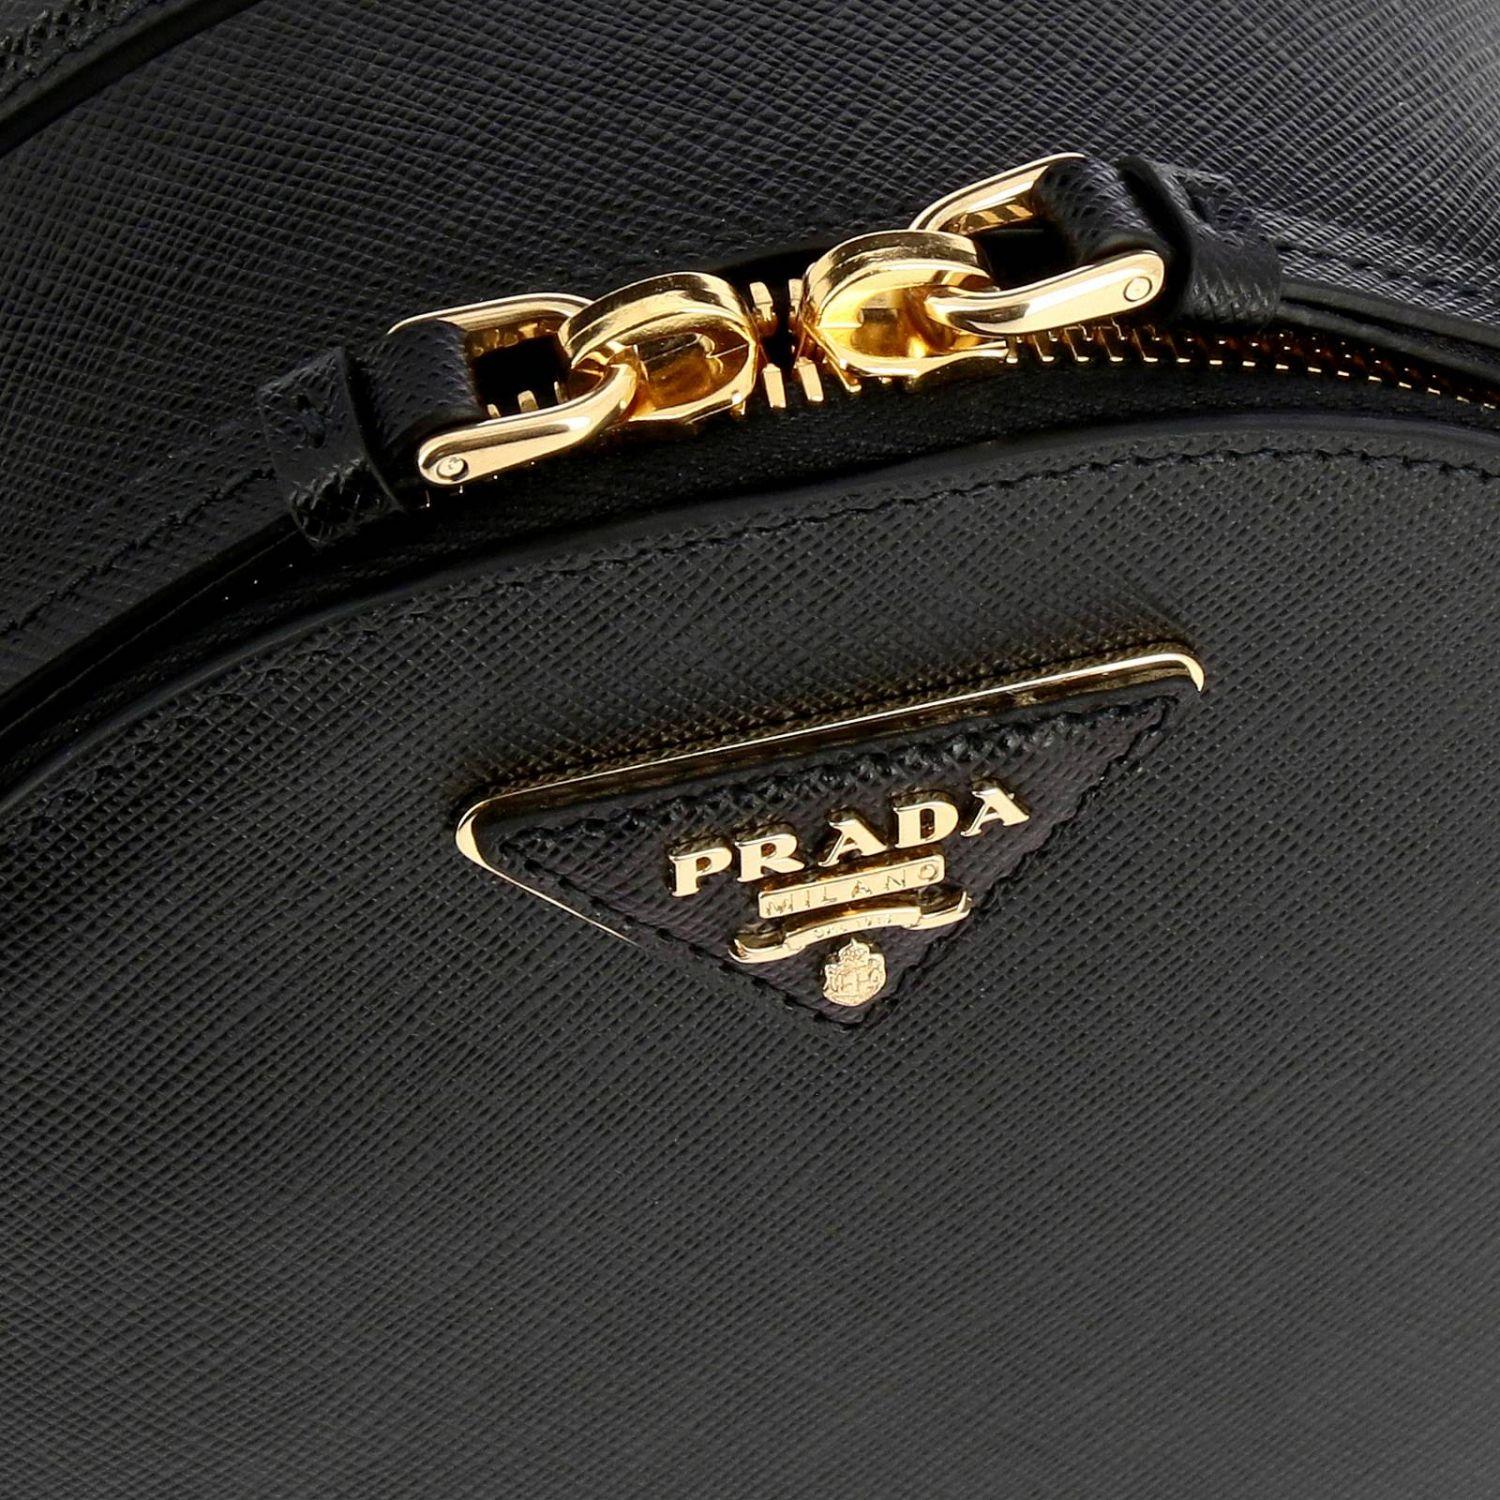 PRADA: Odette bag in saffiano leather - Pink  Prada mini bag 1BH123 NZV  online at